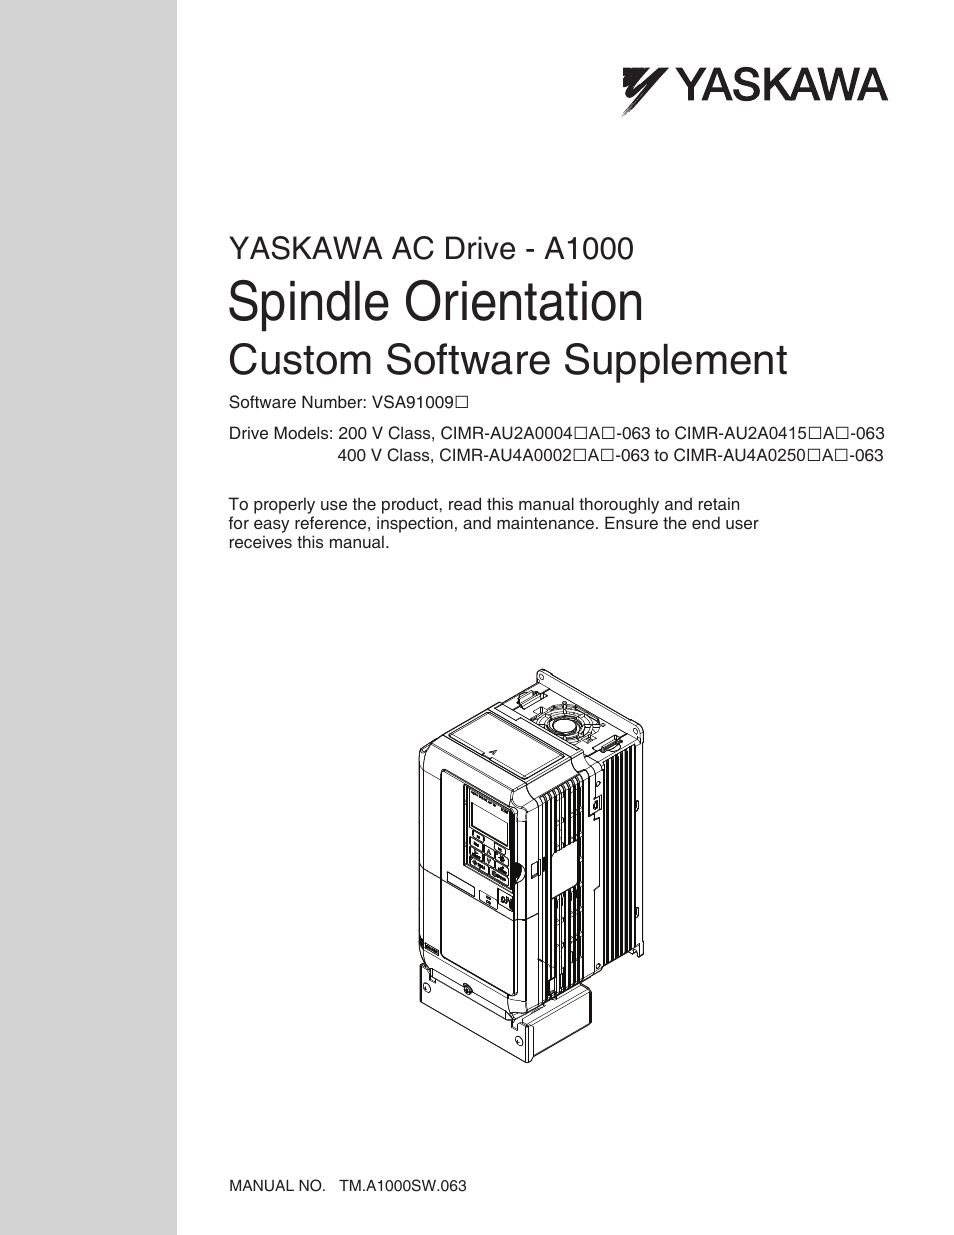 A1000 Spindle Orientation Custom